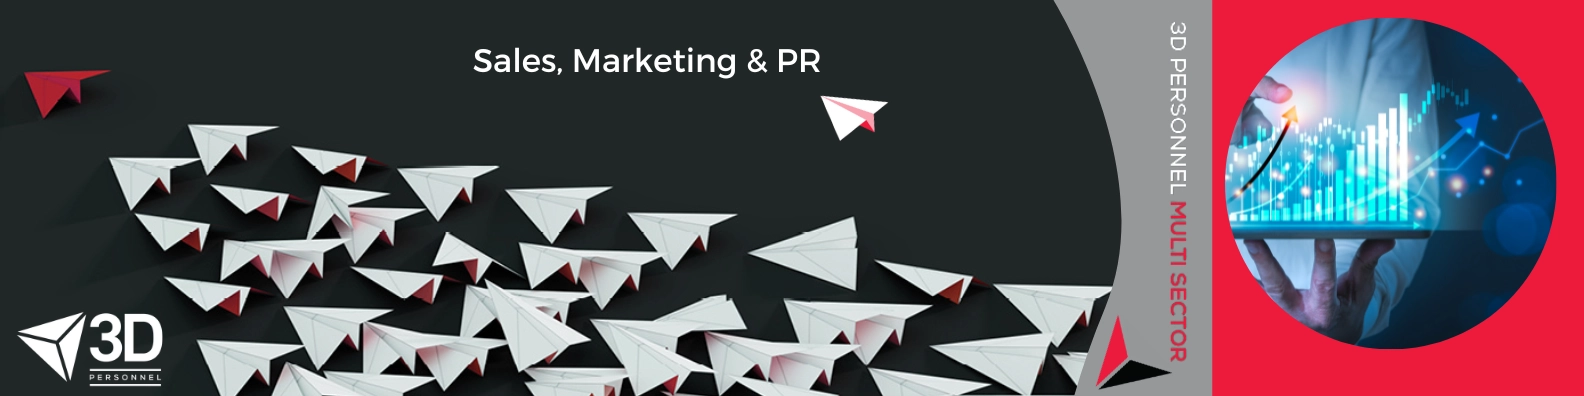 Sales, Marketing & PR graphic